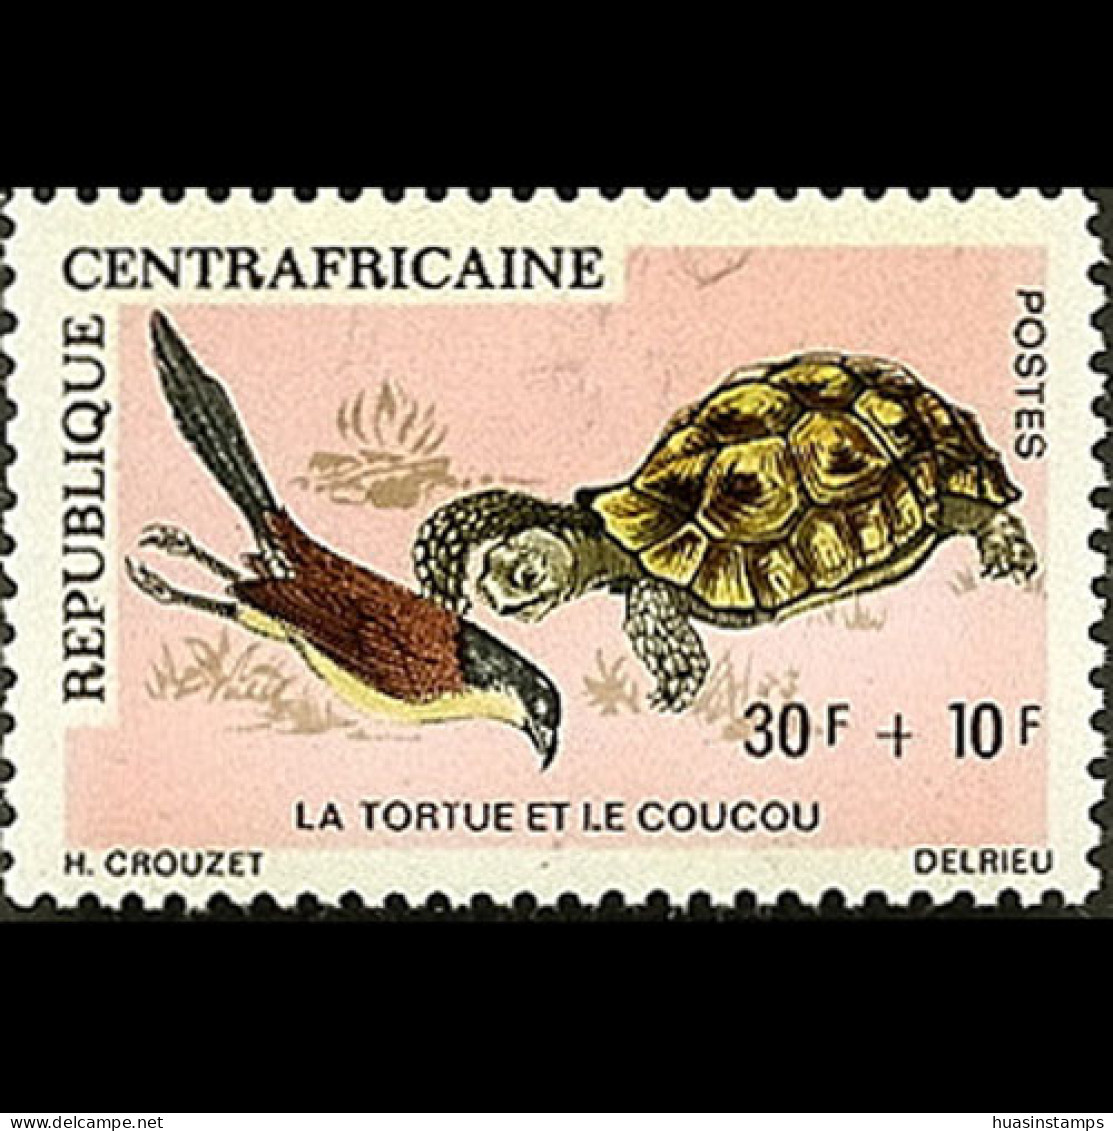 CENTRAL AFRICA 1971 - Scott# B6 Wildlife 30f MNH - República Centroafricana